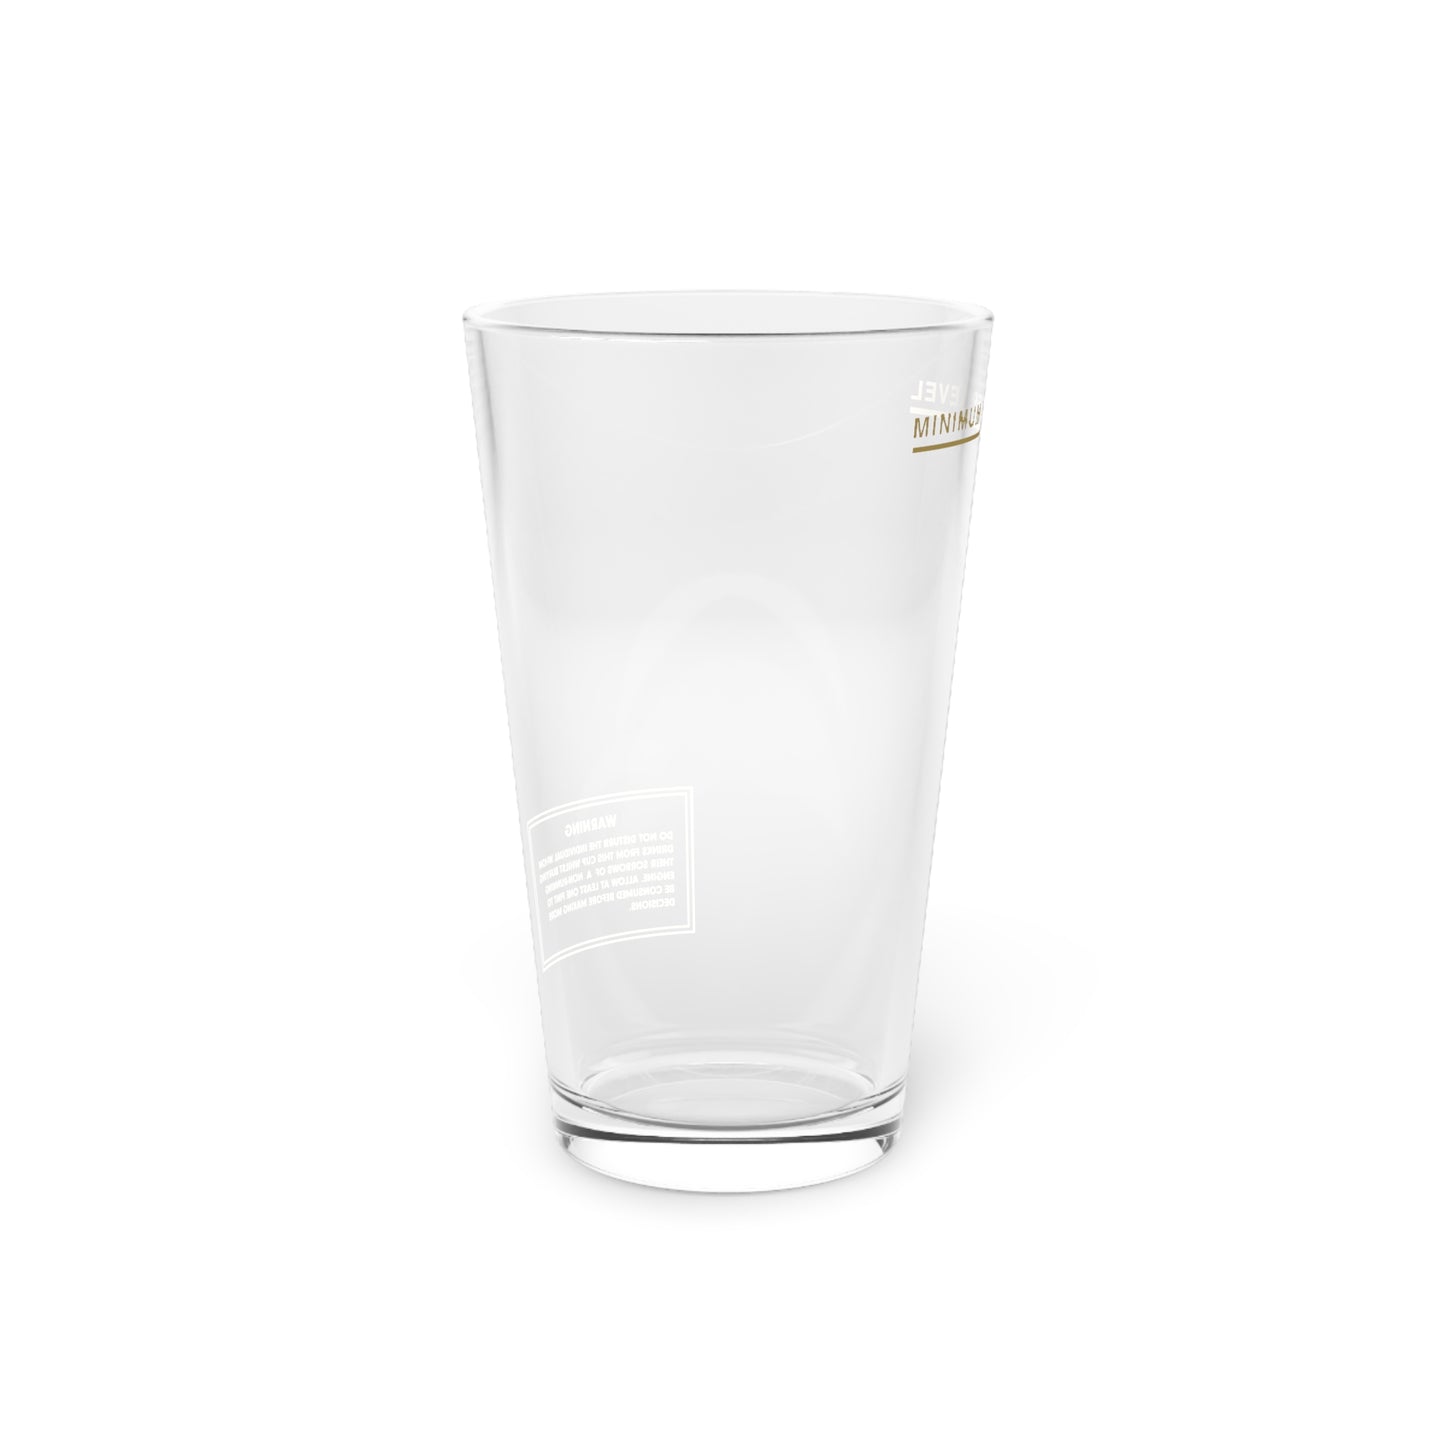 Minimum Beer Level Oil Tank Pint Glass, 16oz